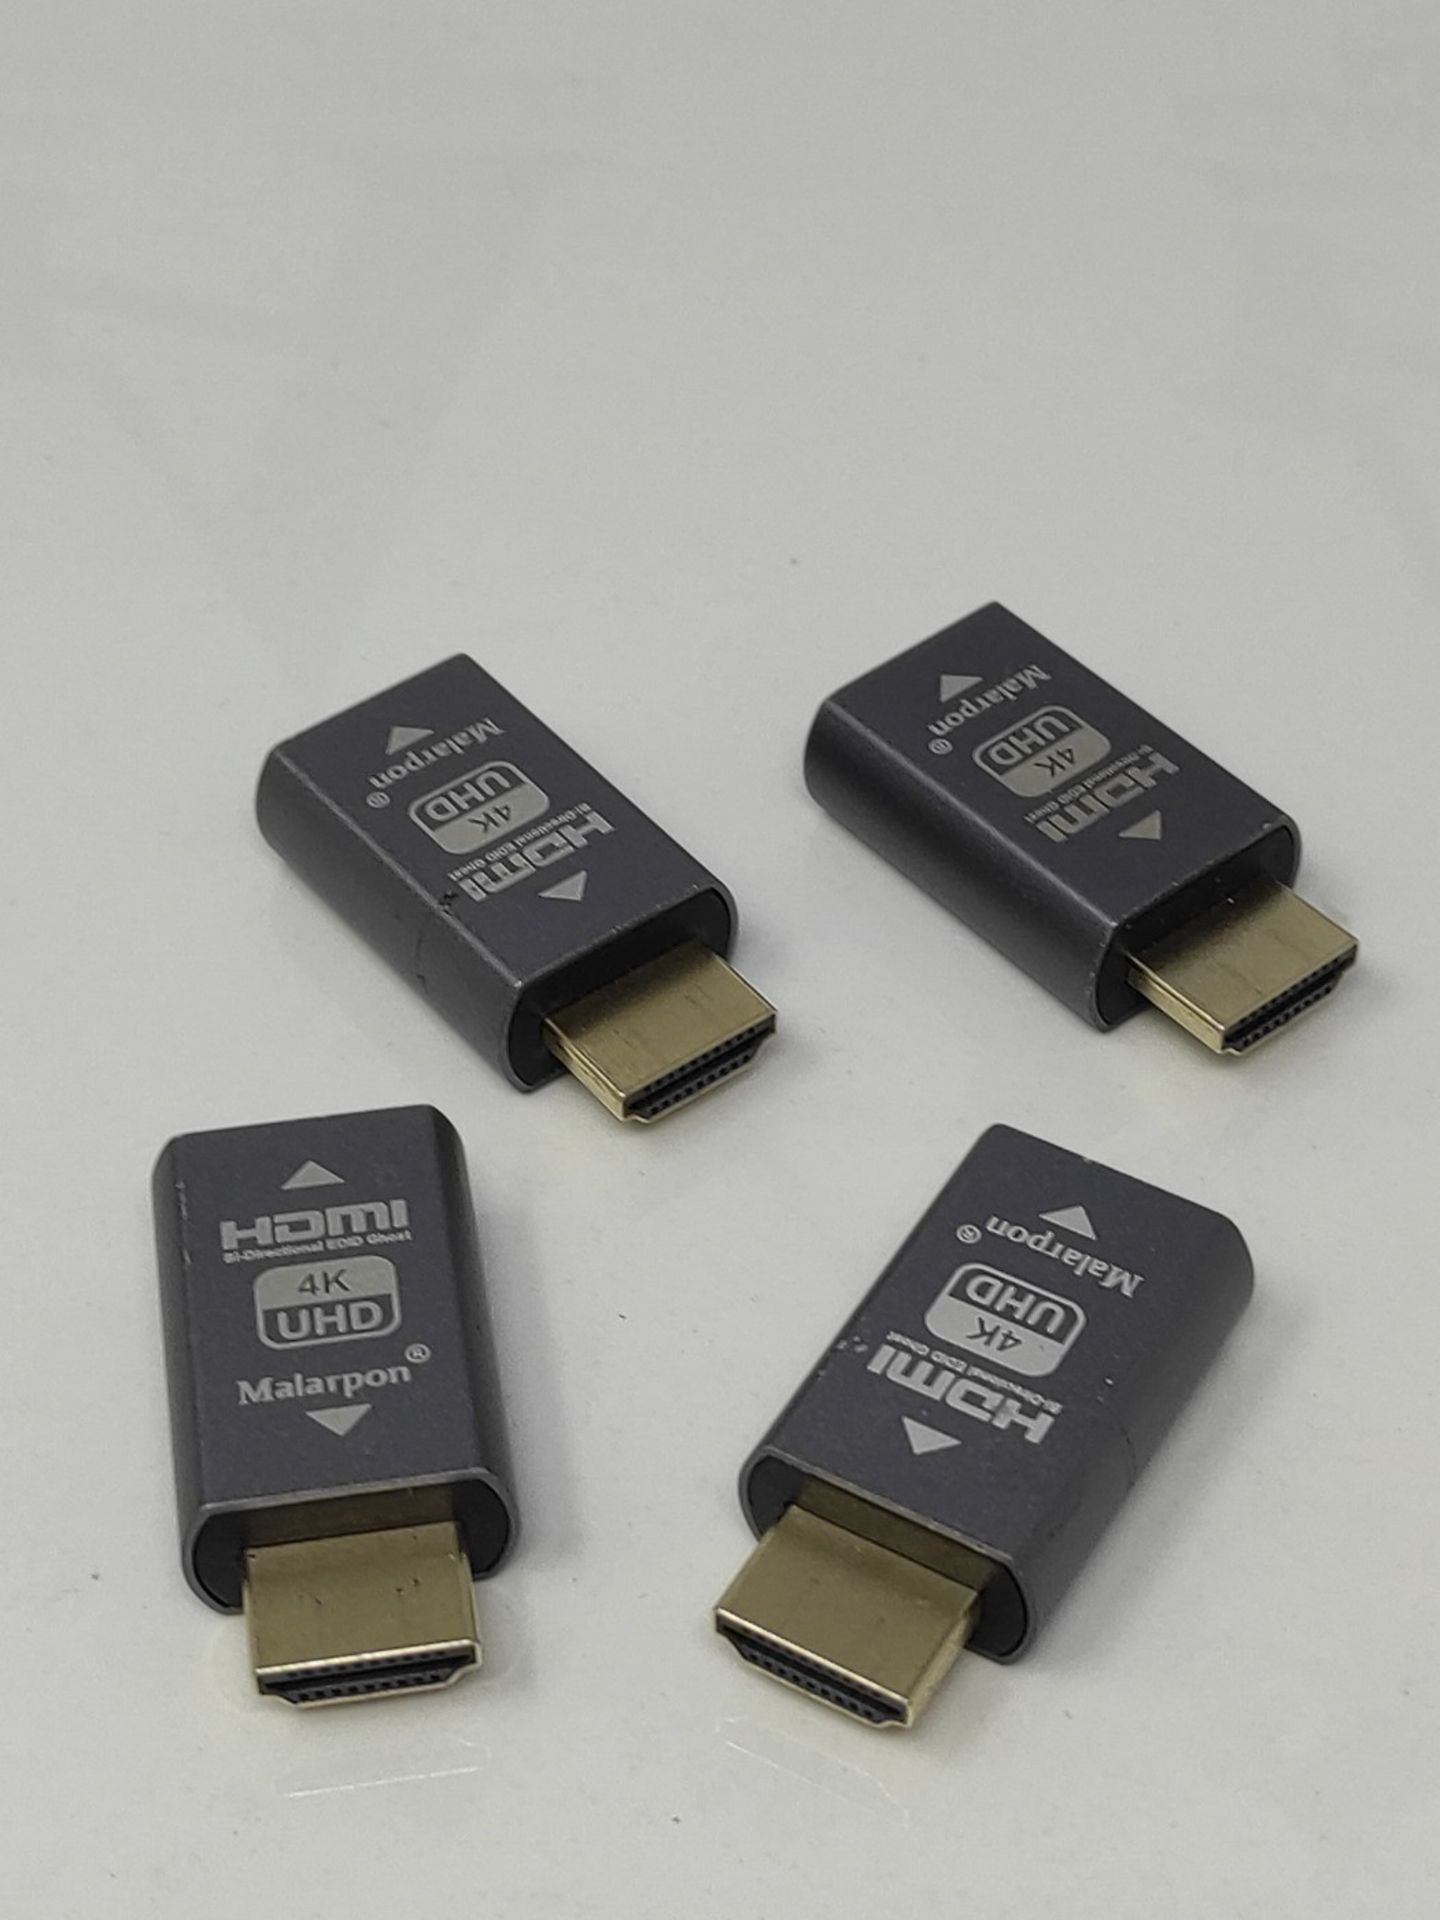 HDMI Edid Emulator Passthrough 3rd Gen Aluminum Headless Keep The EDID of the Monitor, - Bild 2 aus 2